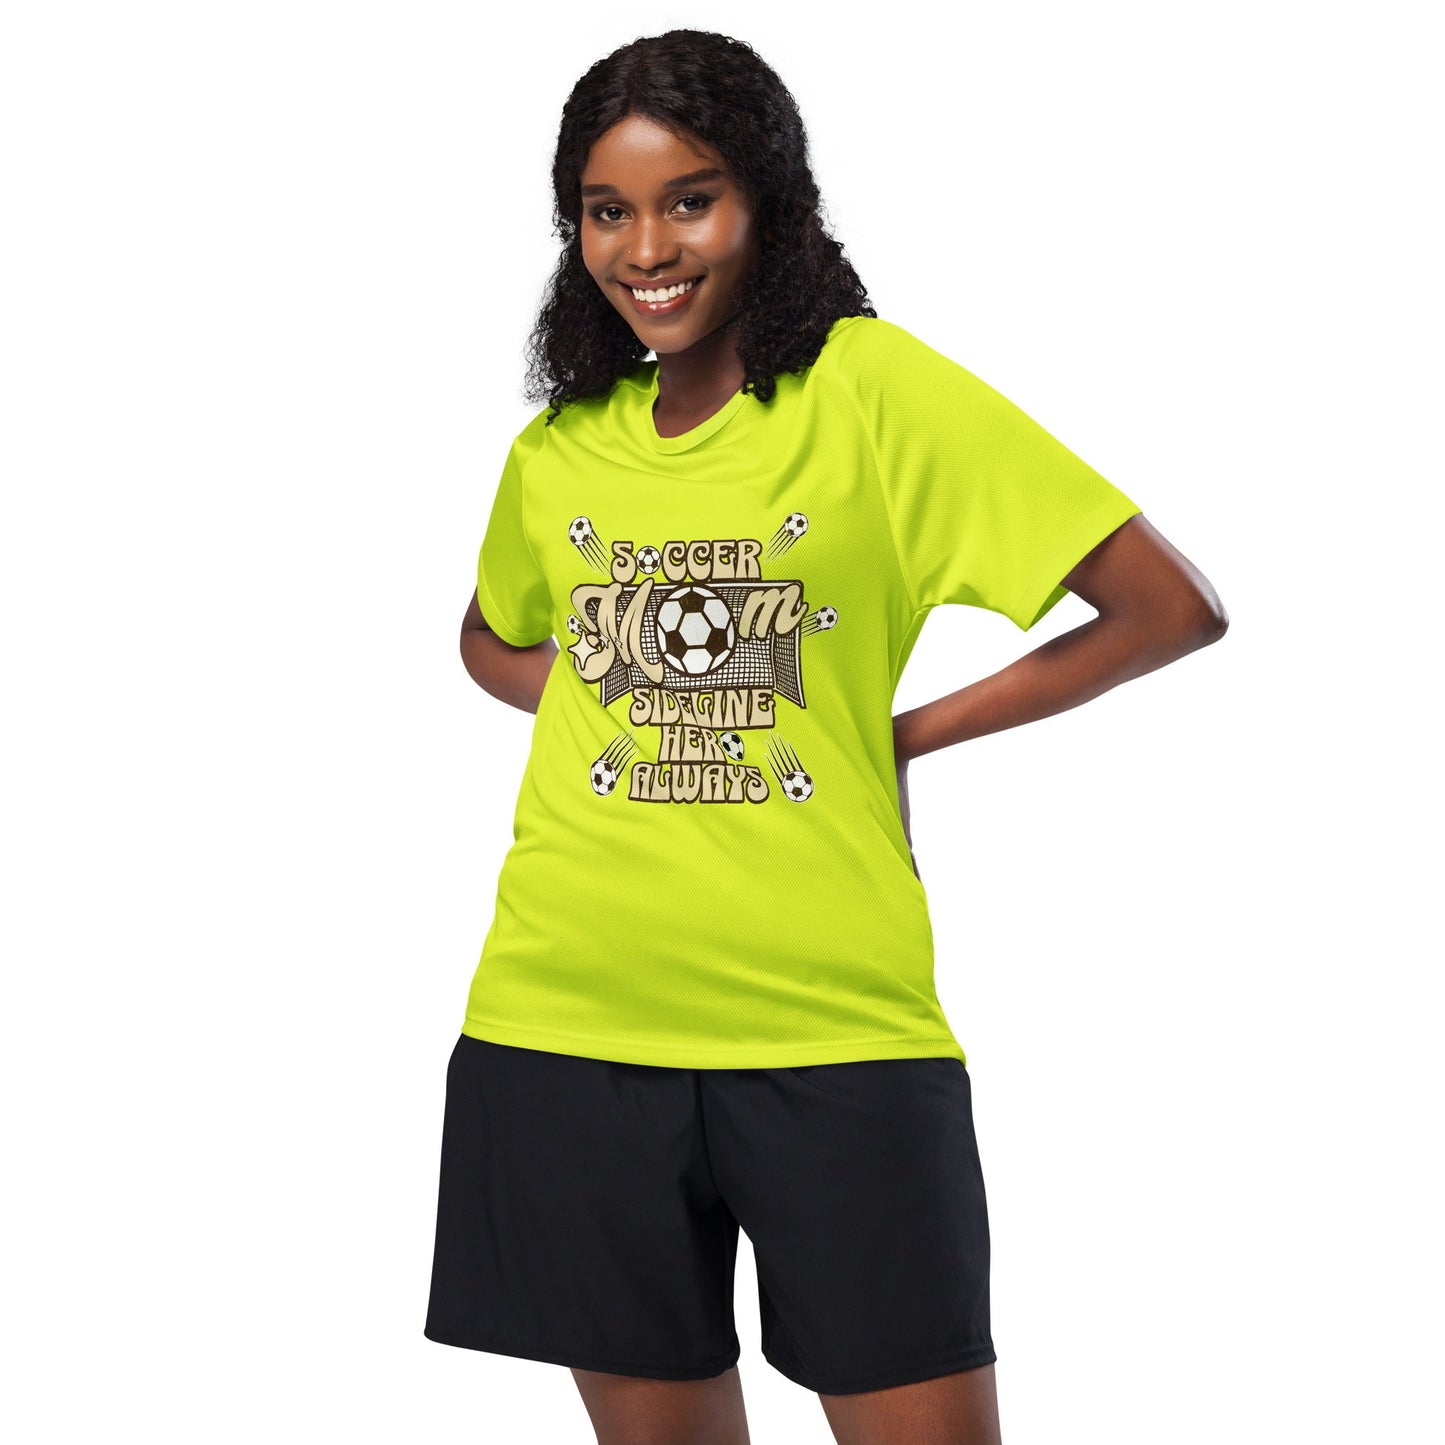 Soccer MOM Sideline Hero Always Sports Jersey-sweatshirt-Neon Yellow-S-mysticalcherry